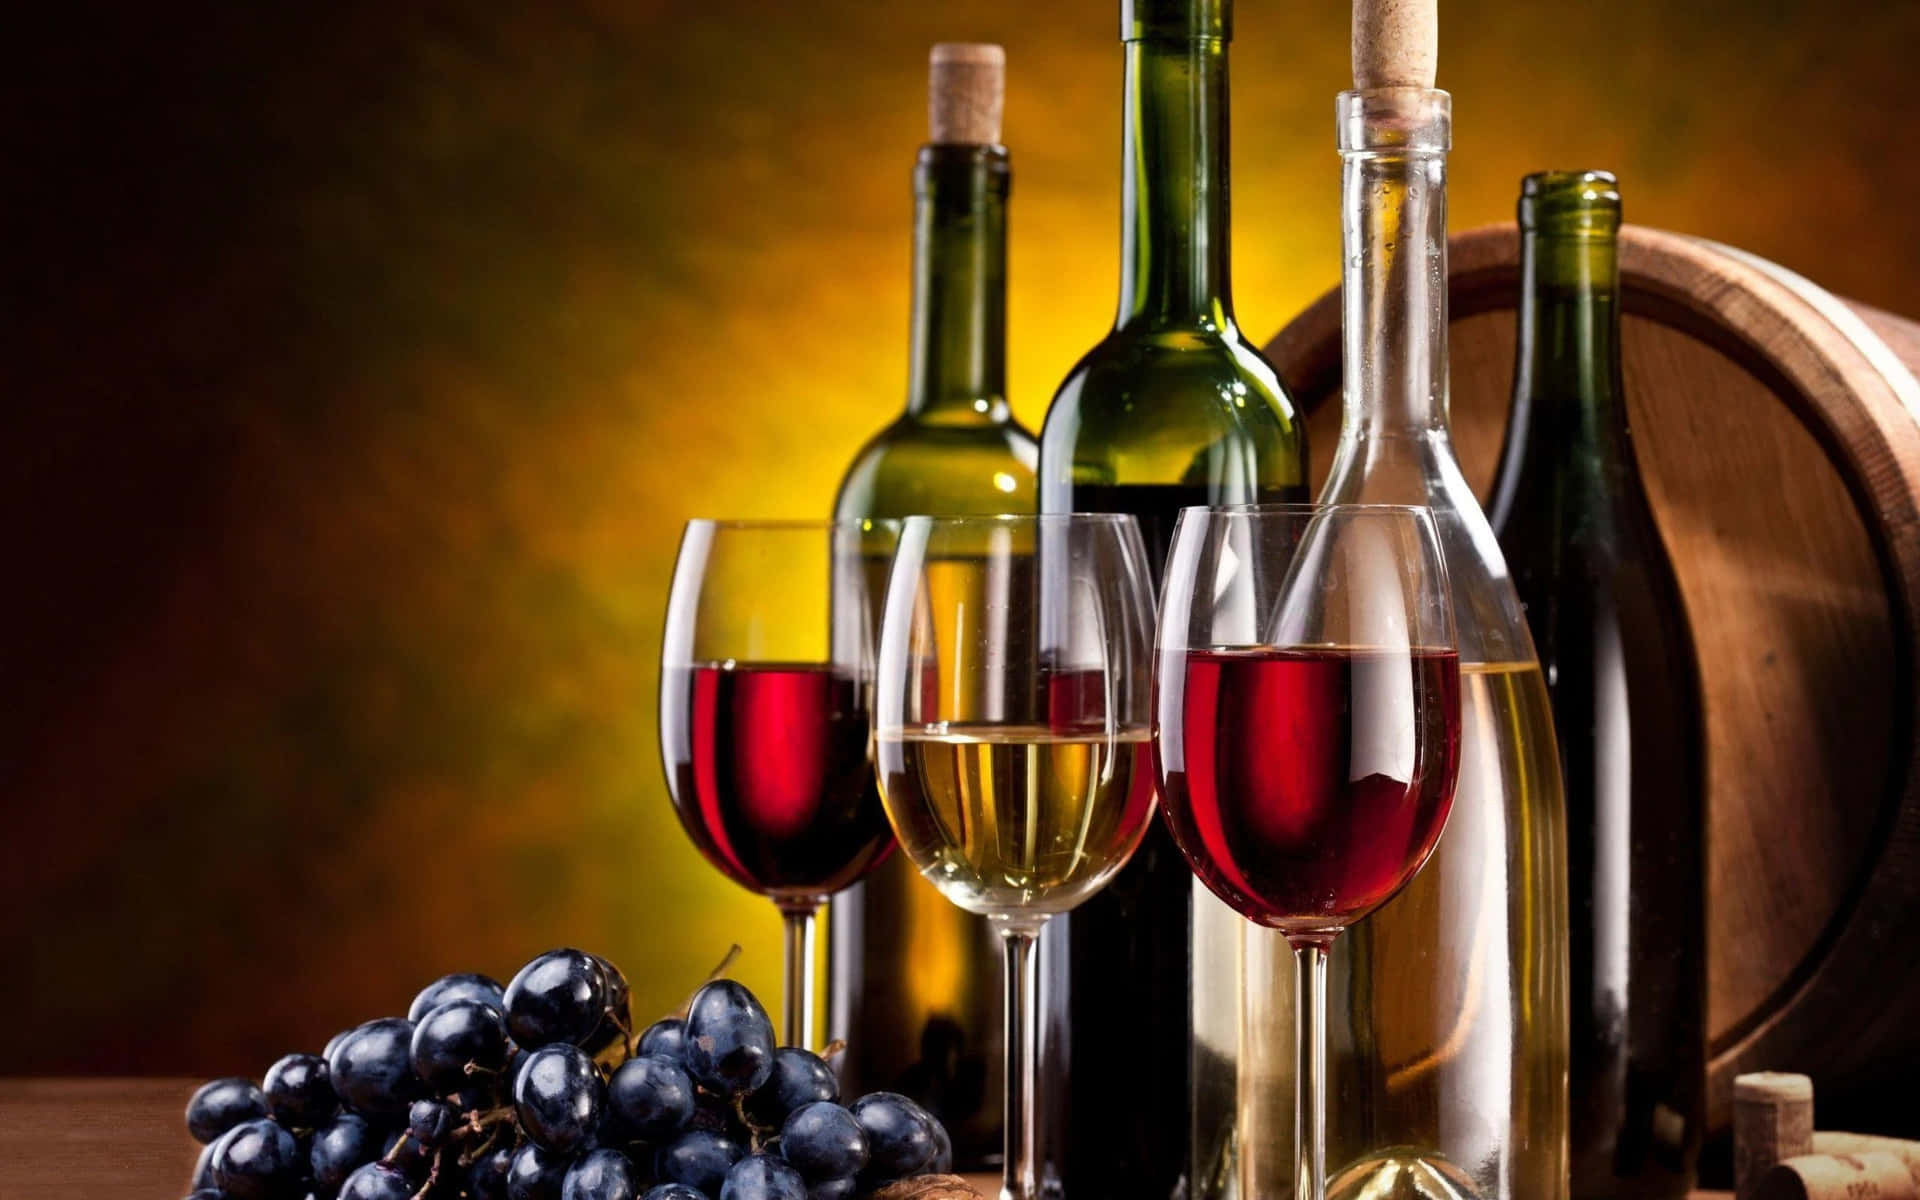 Wine Selebrtion - Enjoy in Moderation